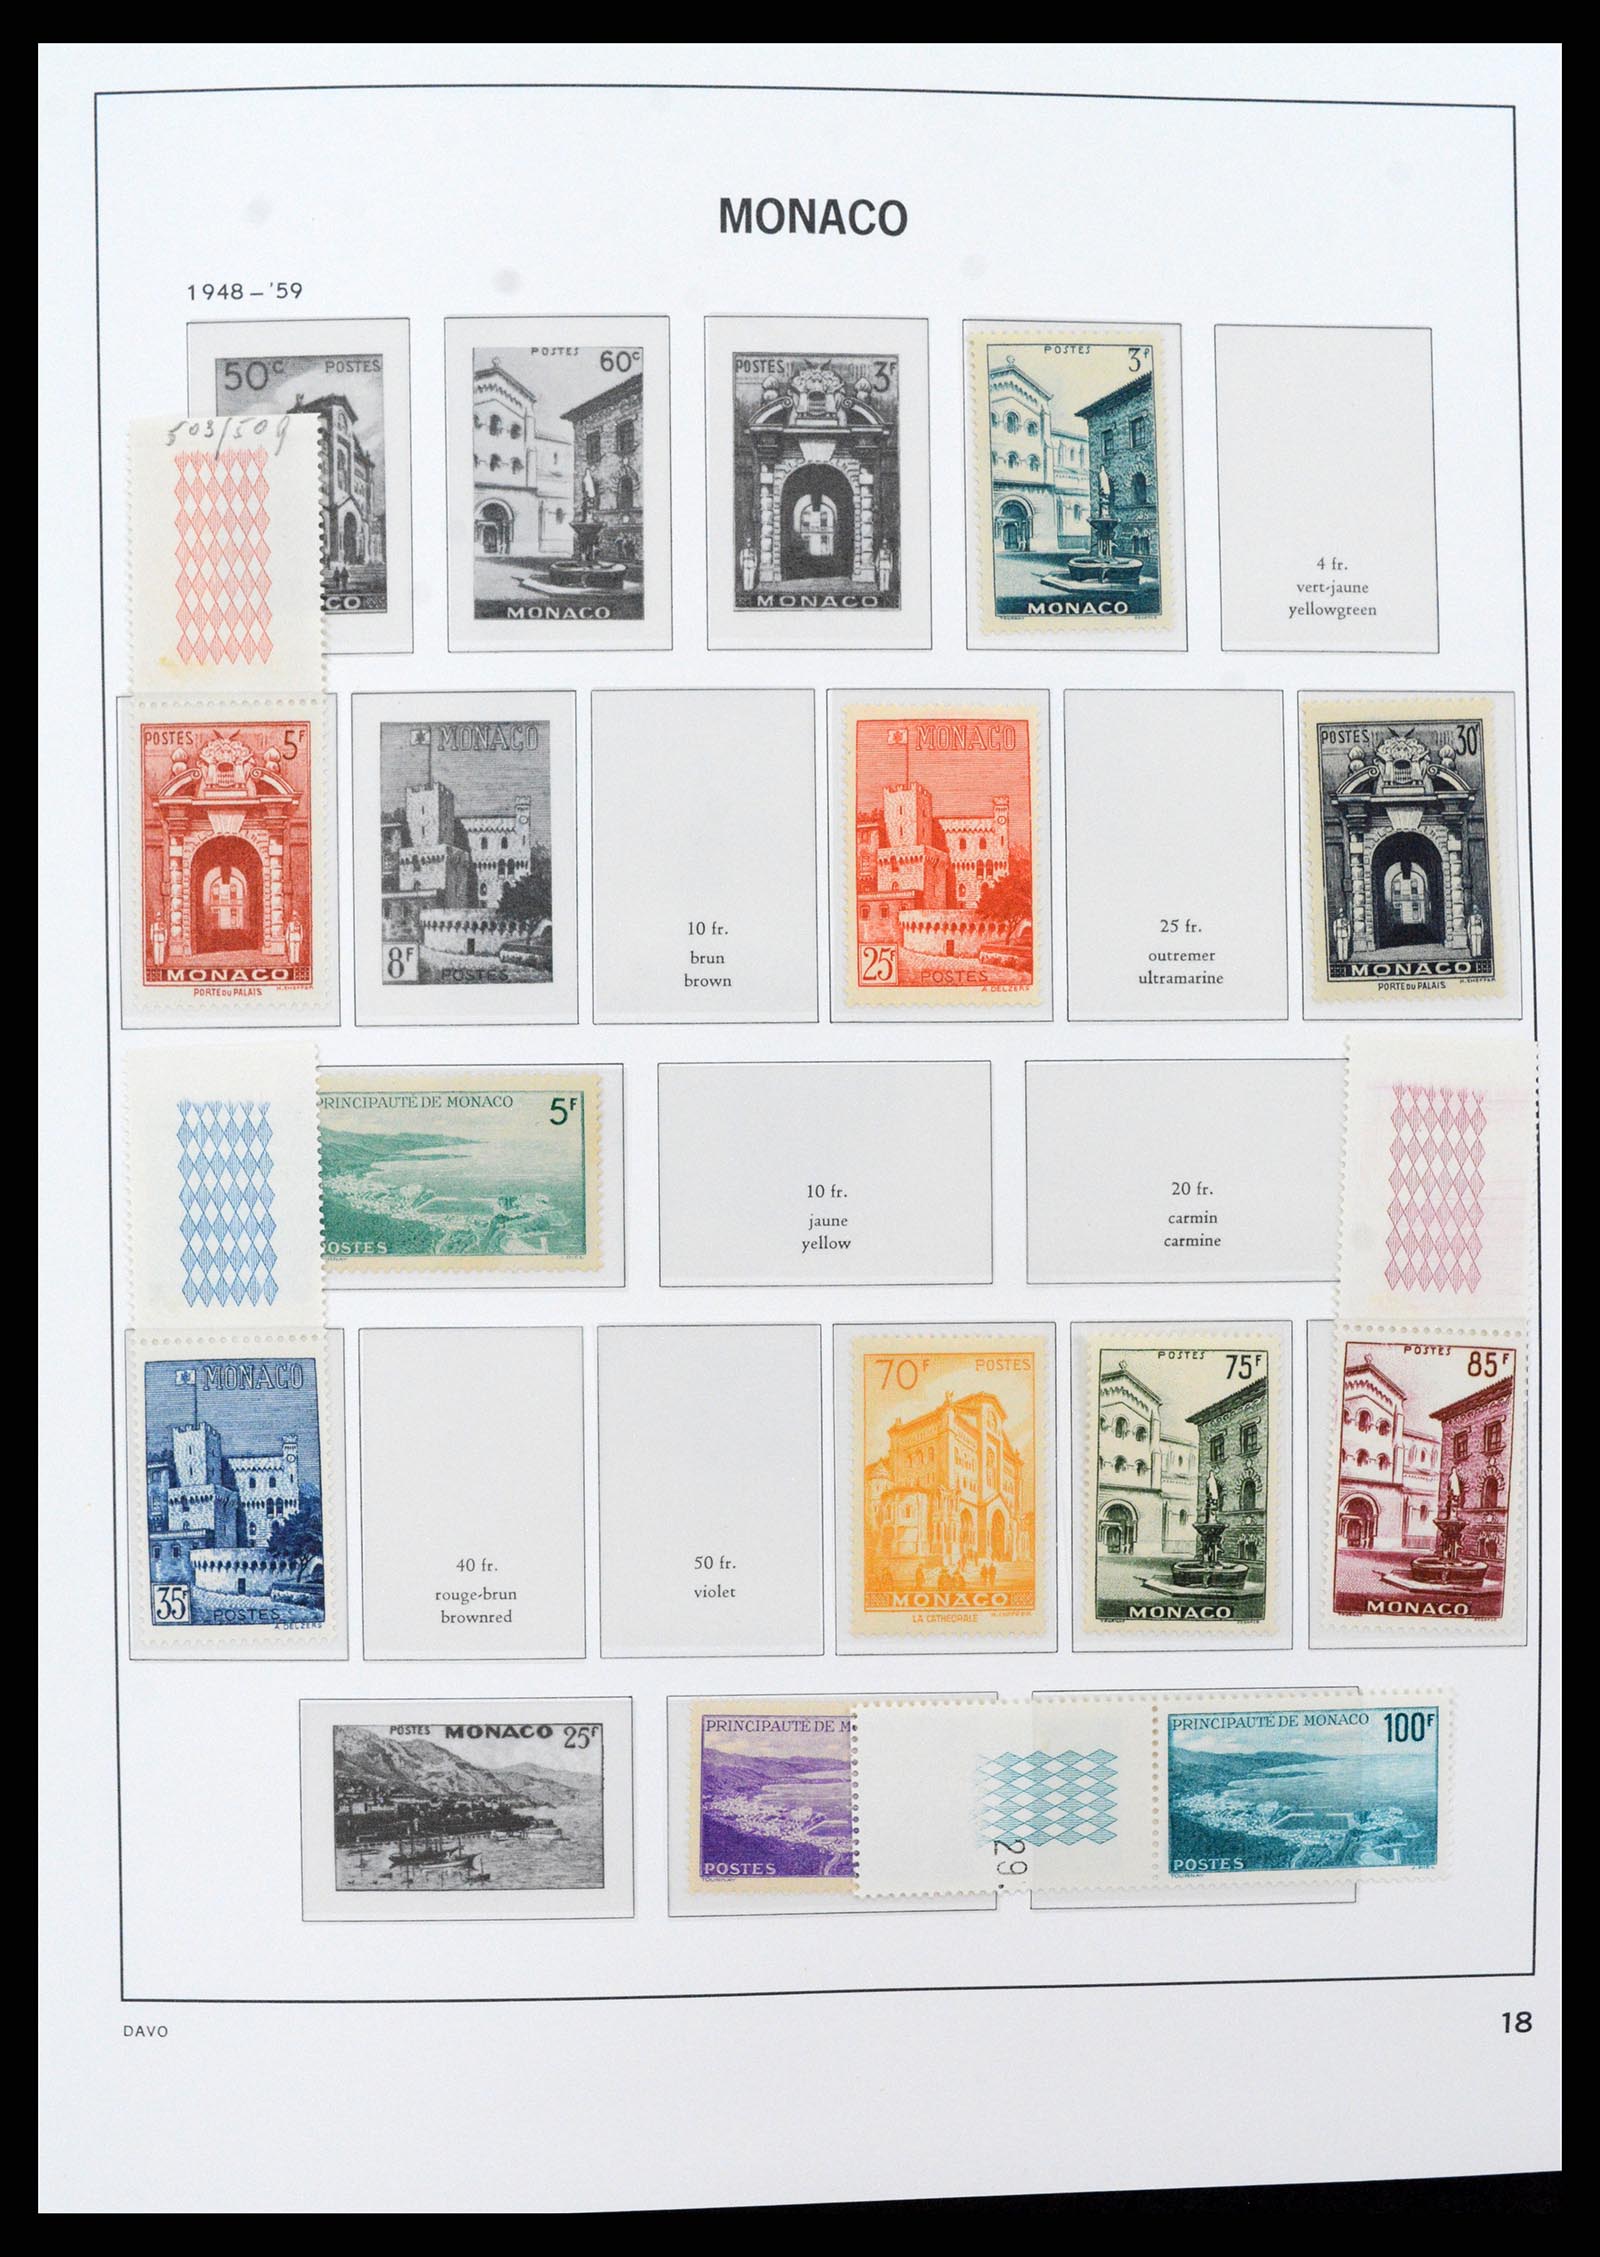 37279 018 - Stamp collection 37279 Monaco 1885-1969.